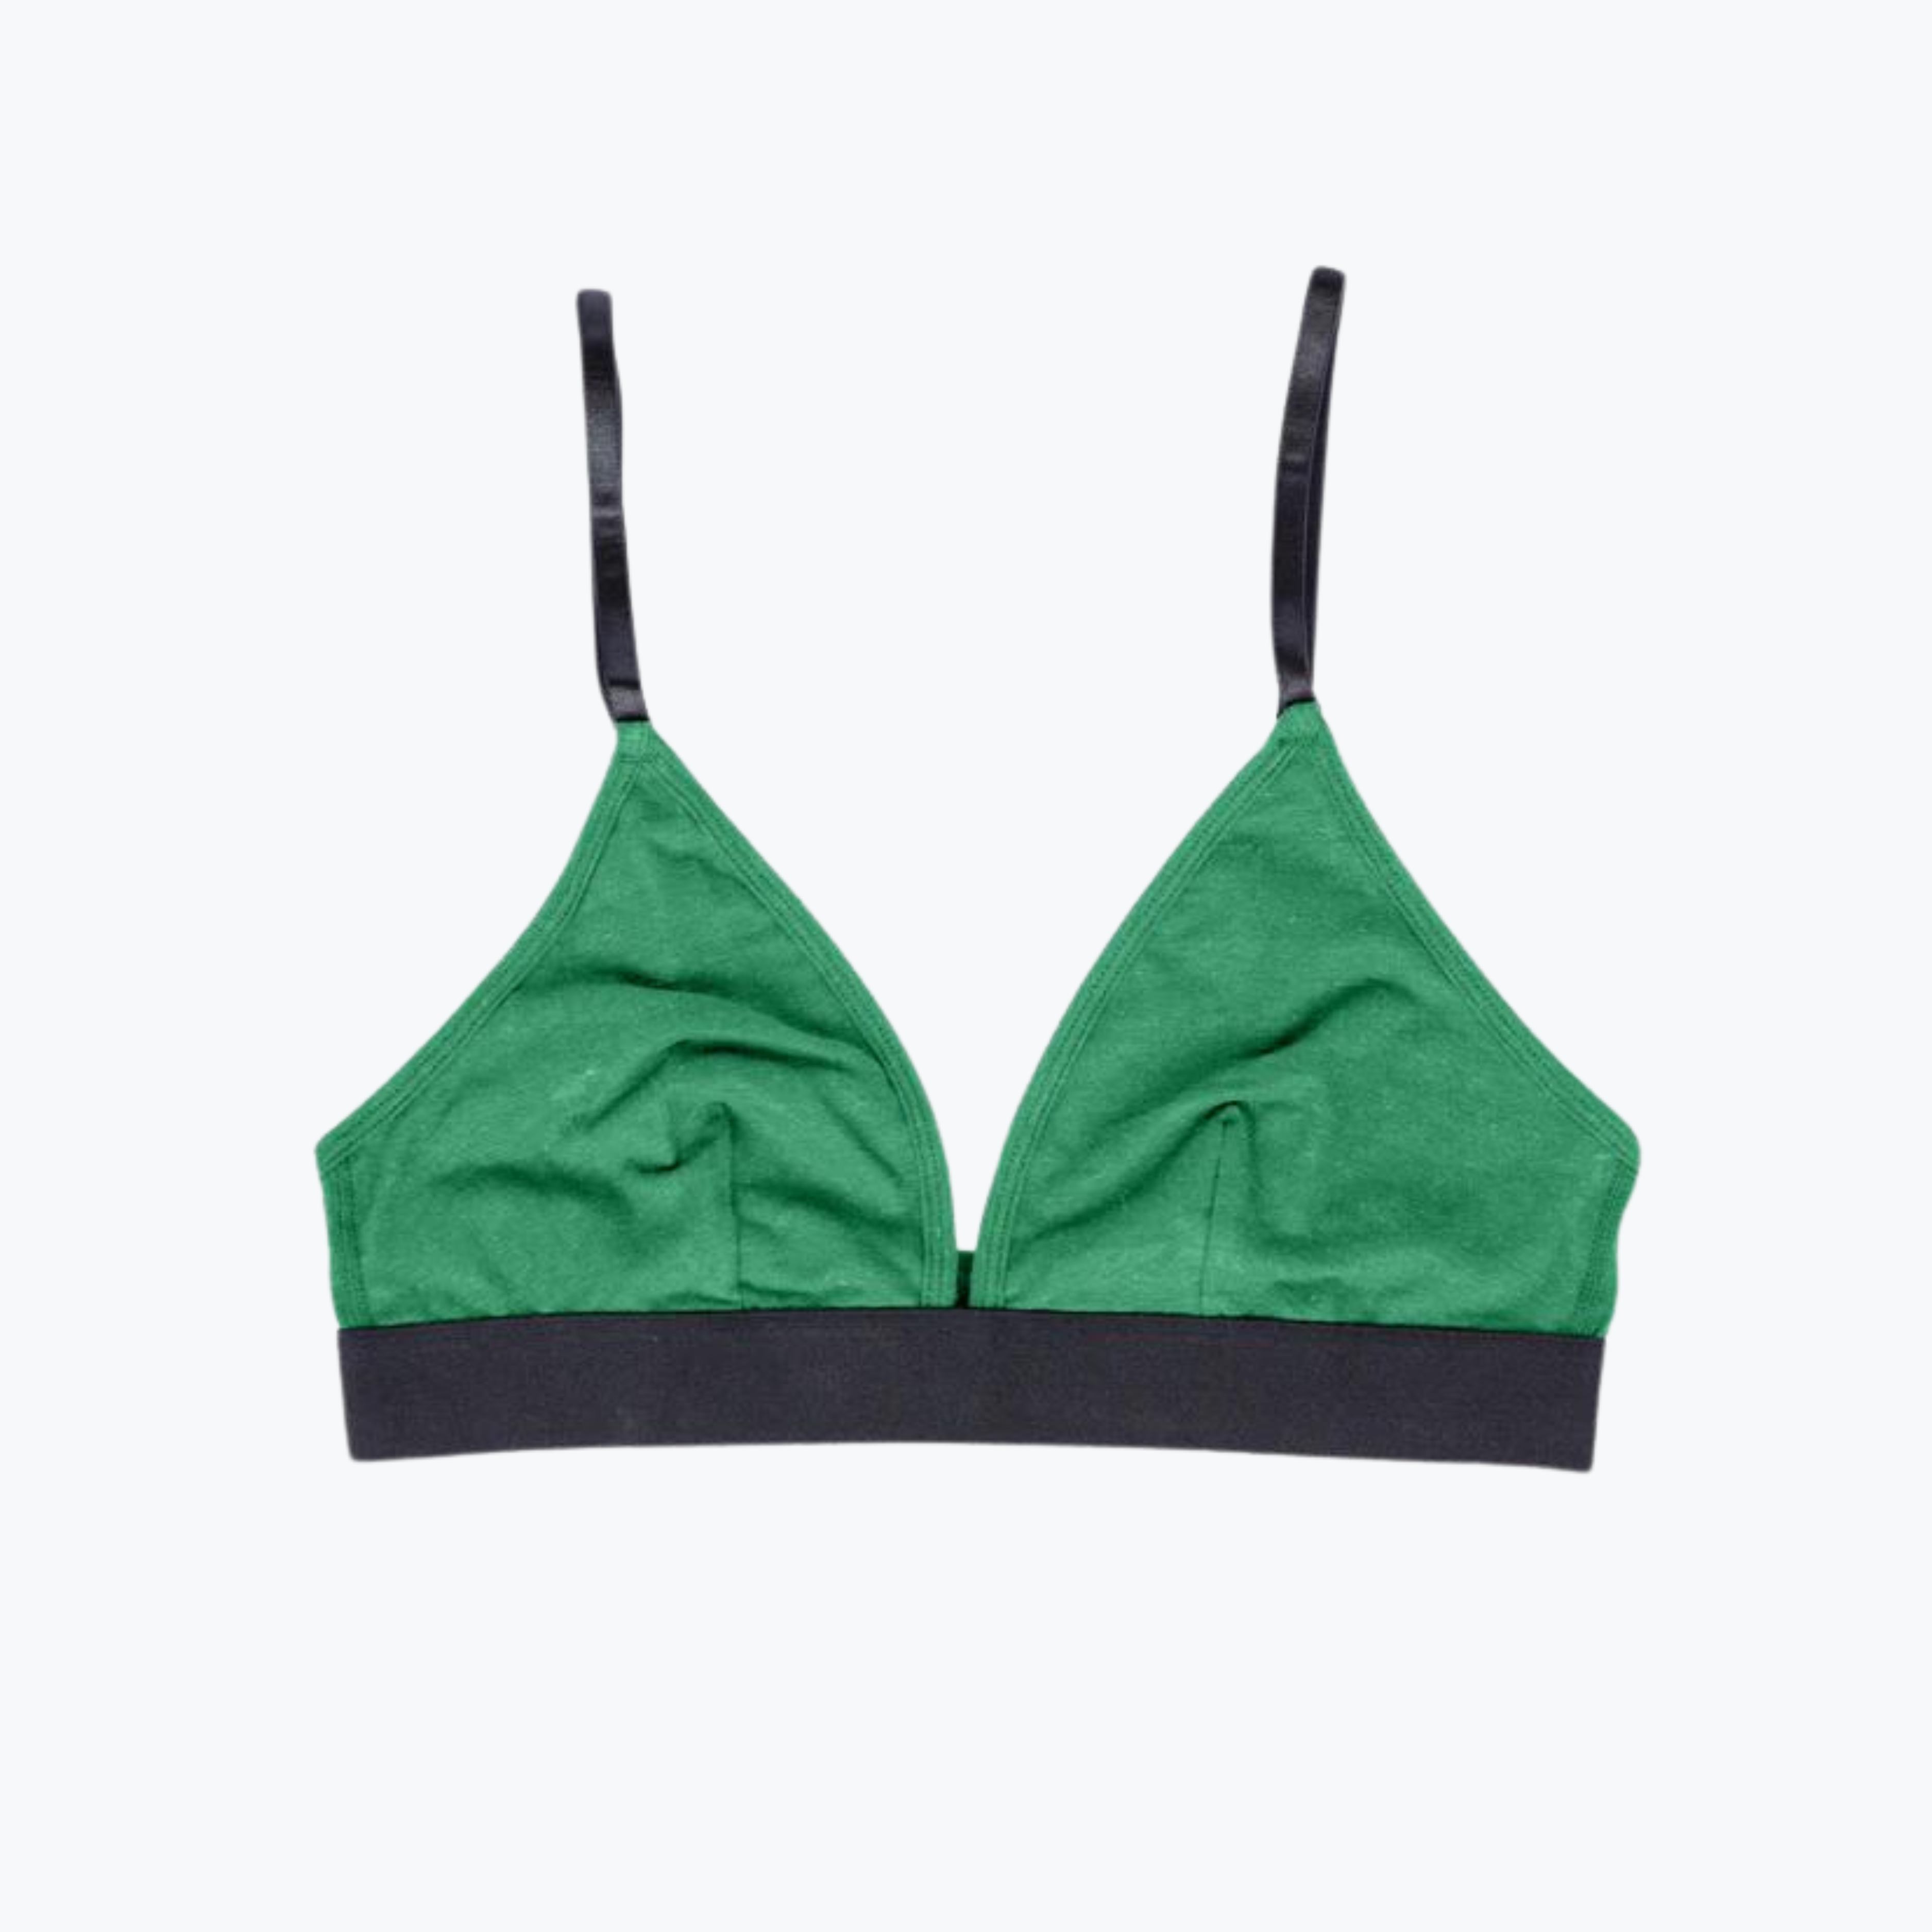 Entyinea Women's Minimizer Bras Embroidered Triangle Bralette Green 85C 